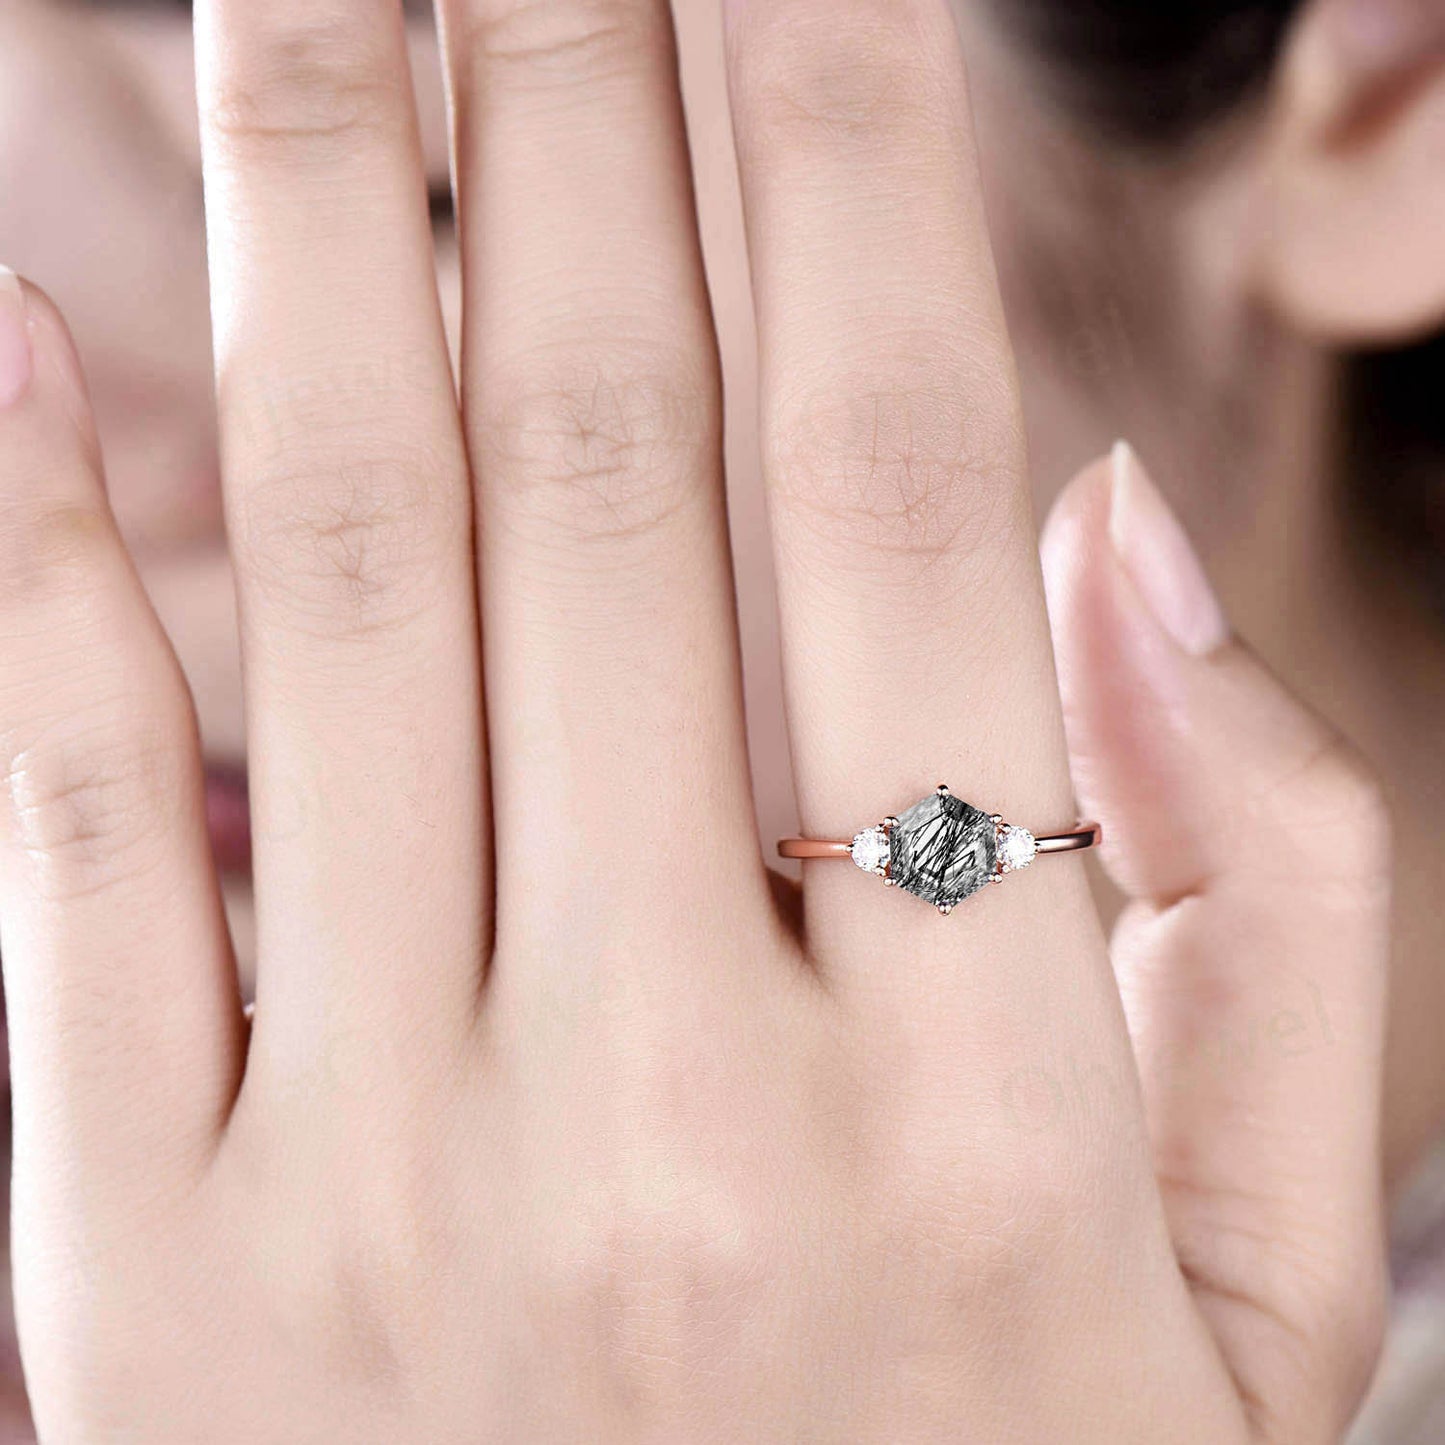 Hexagon black rutilated quartz engagement ring for women vintage three stone moissanite ring rose gold dainty ring silver anniversary ring